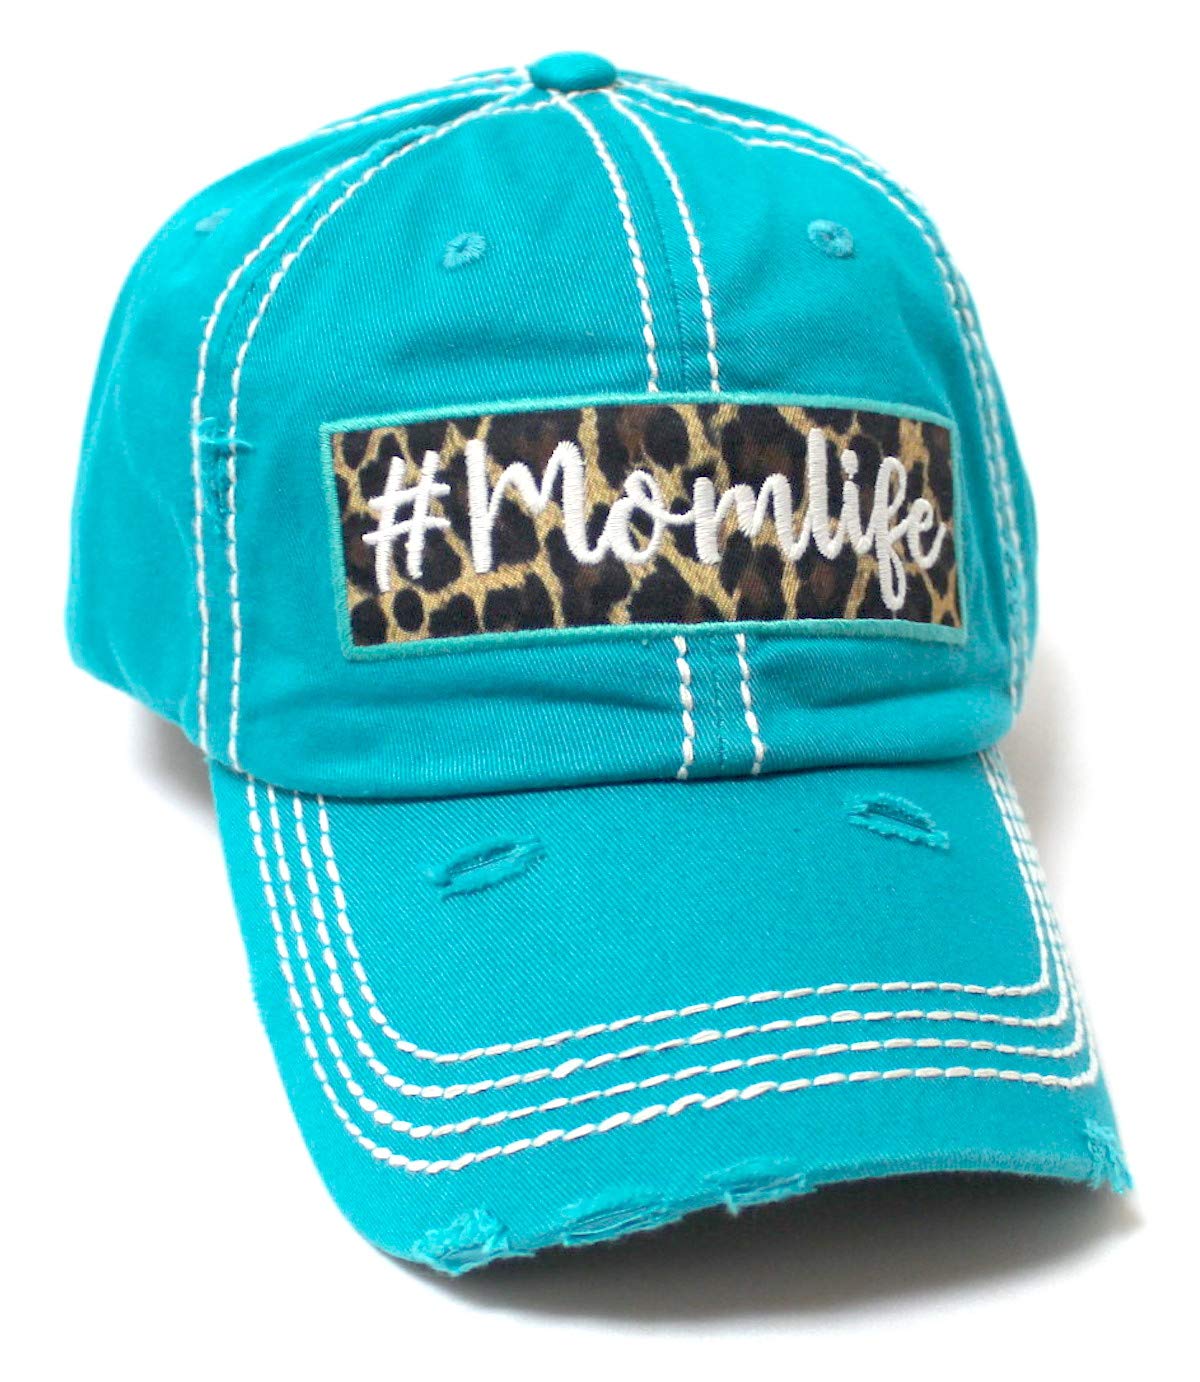 CAPS 'N VINTAGE Women's Distressed Cap #Momlife Leopard Print Patch Embroidery Monogram Hat, California Beach Blue - Caps 'N Vintage 